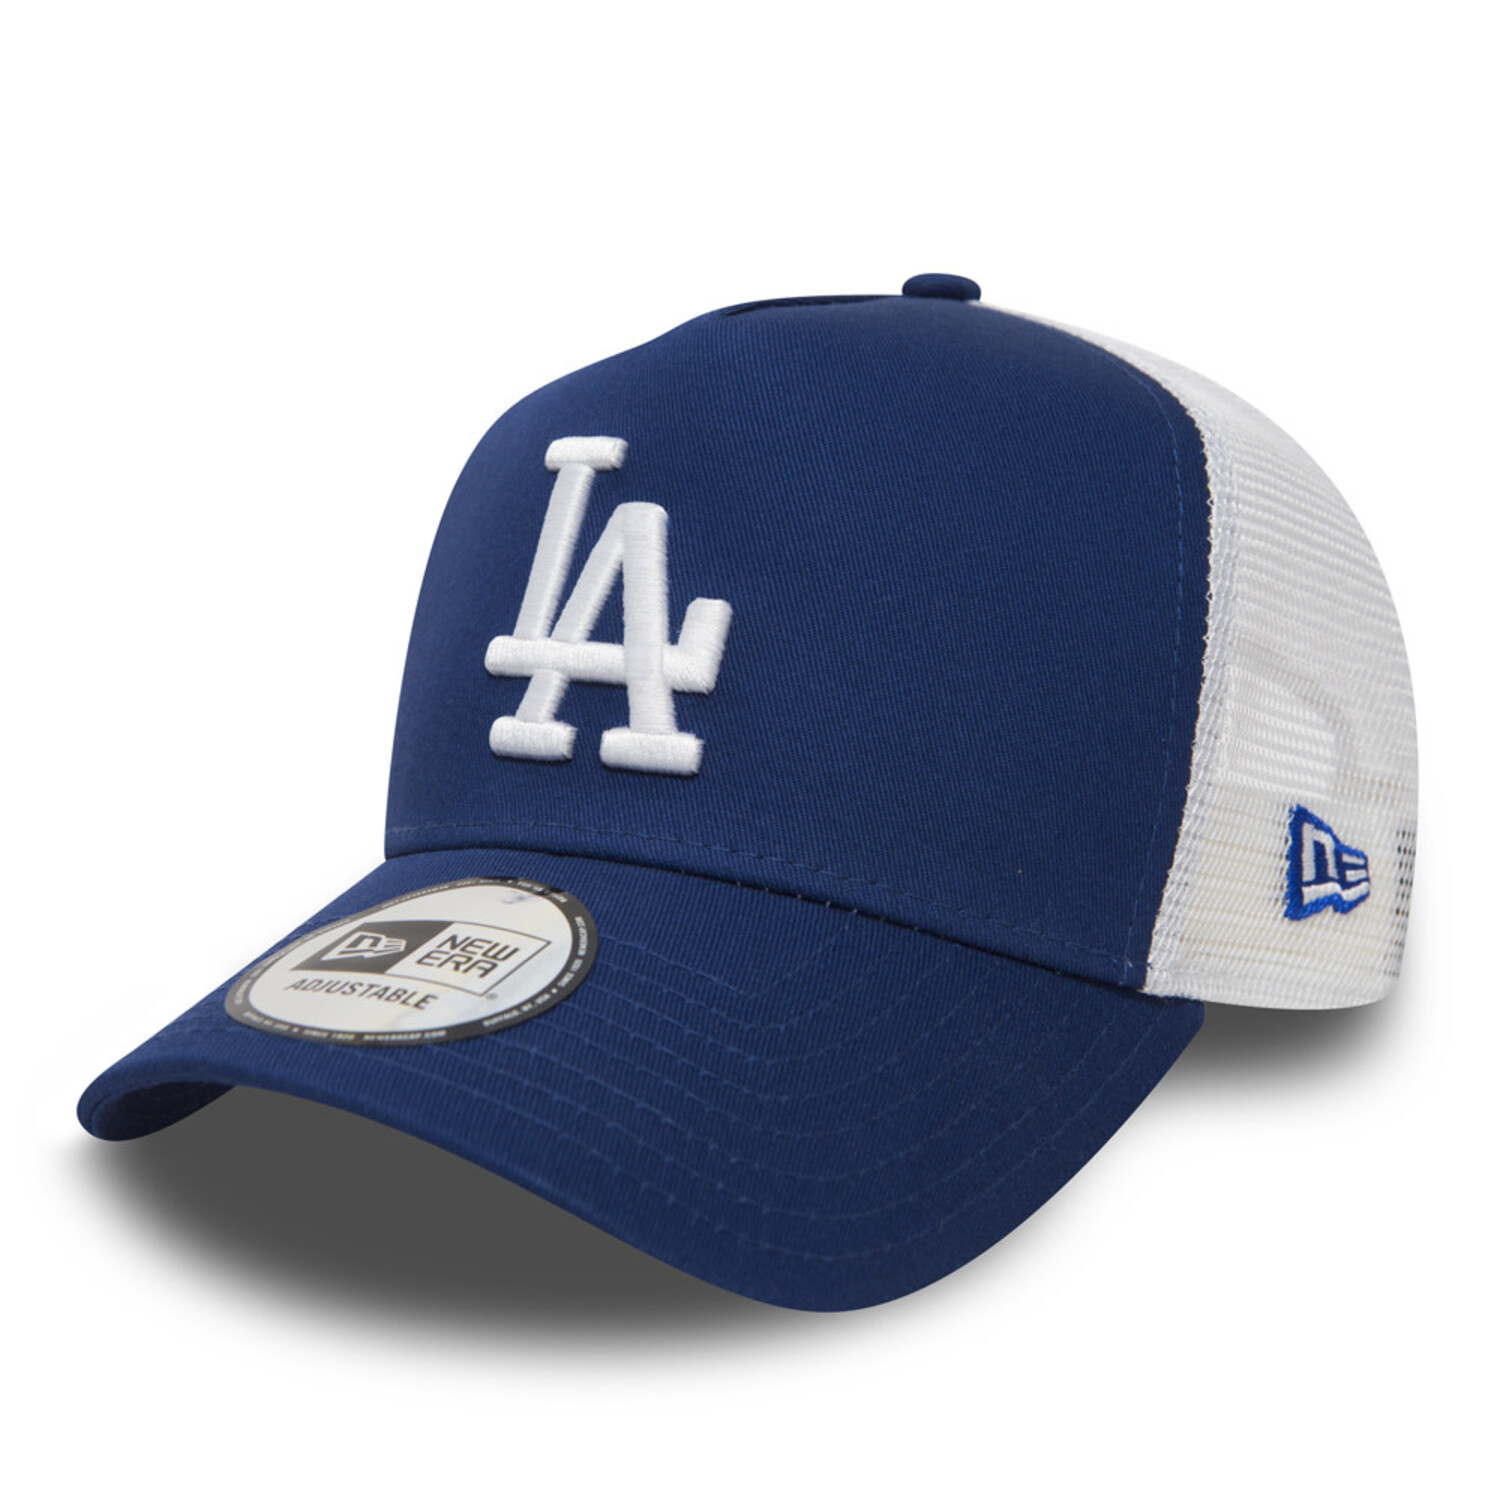 Dodgers City Connect Jersey, Dodgers City Connect Hats, Shirts, L.A.  Dodgers City Connect Collection